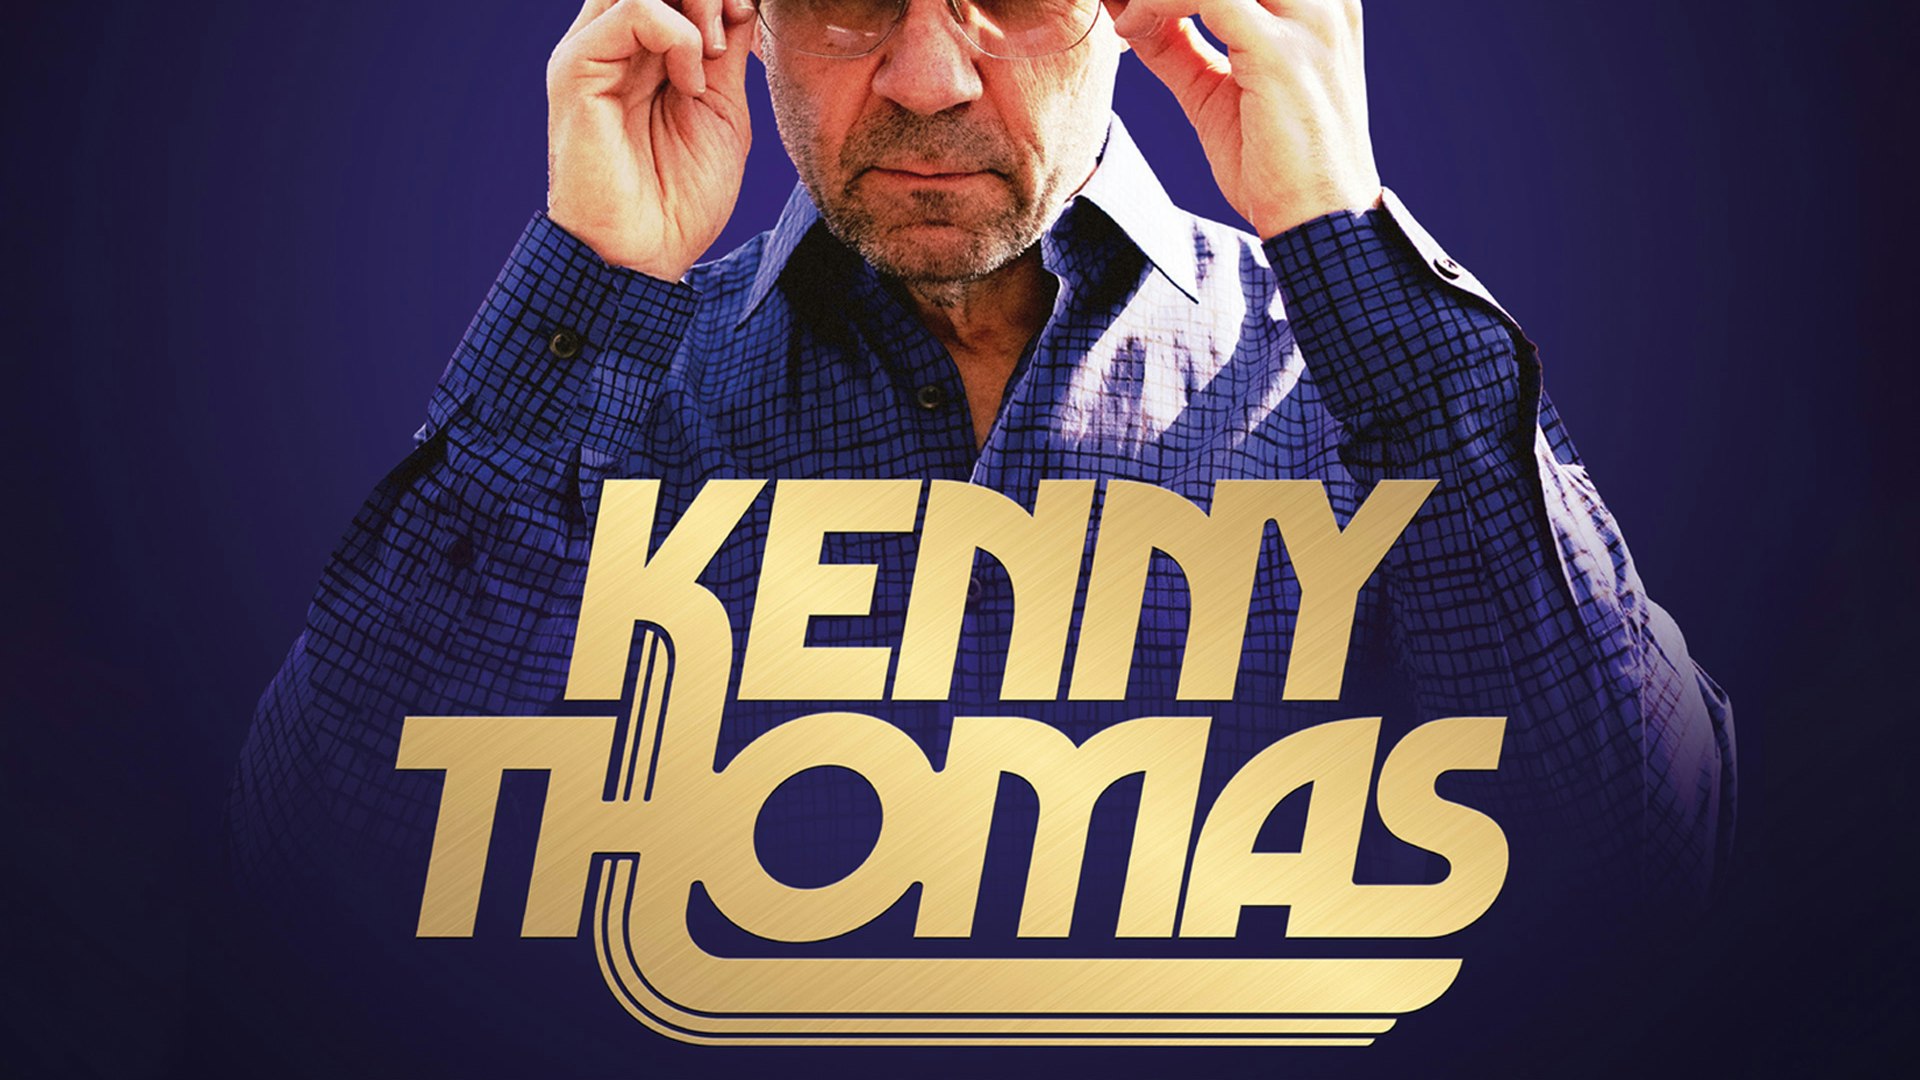 Kenny Thomas | Manchester